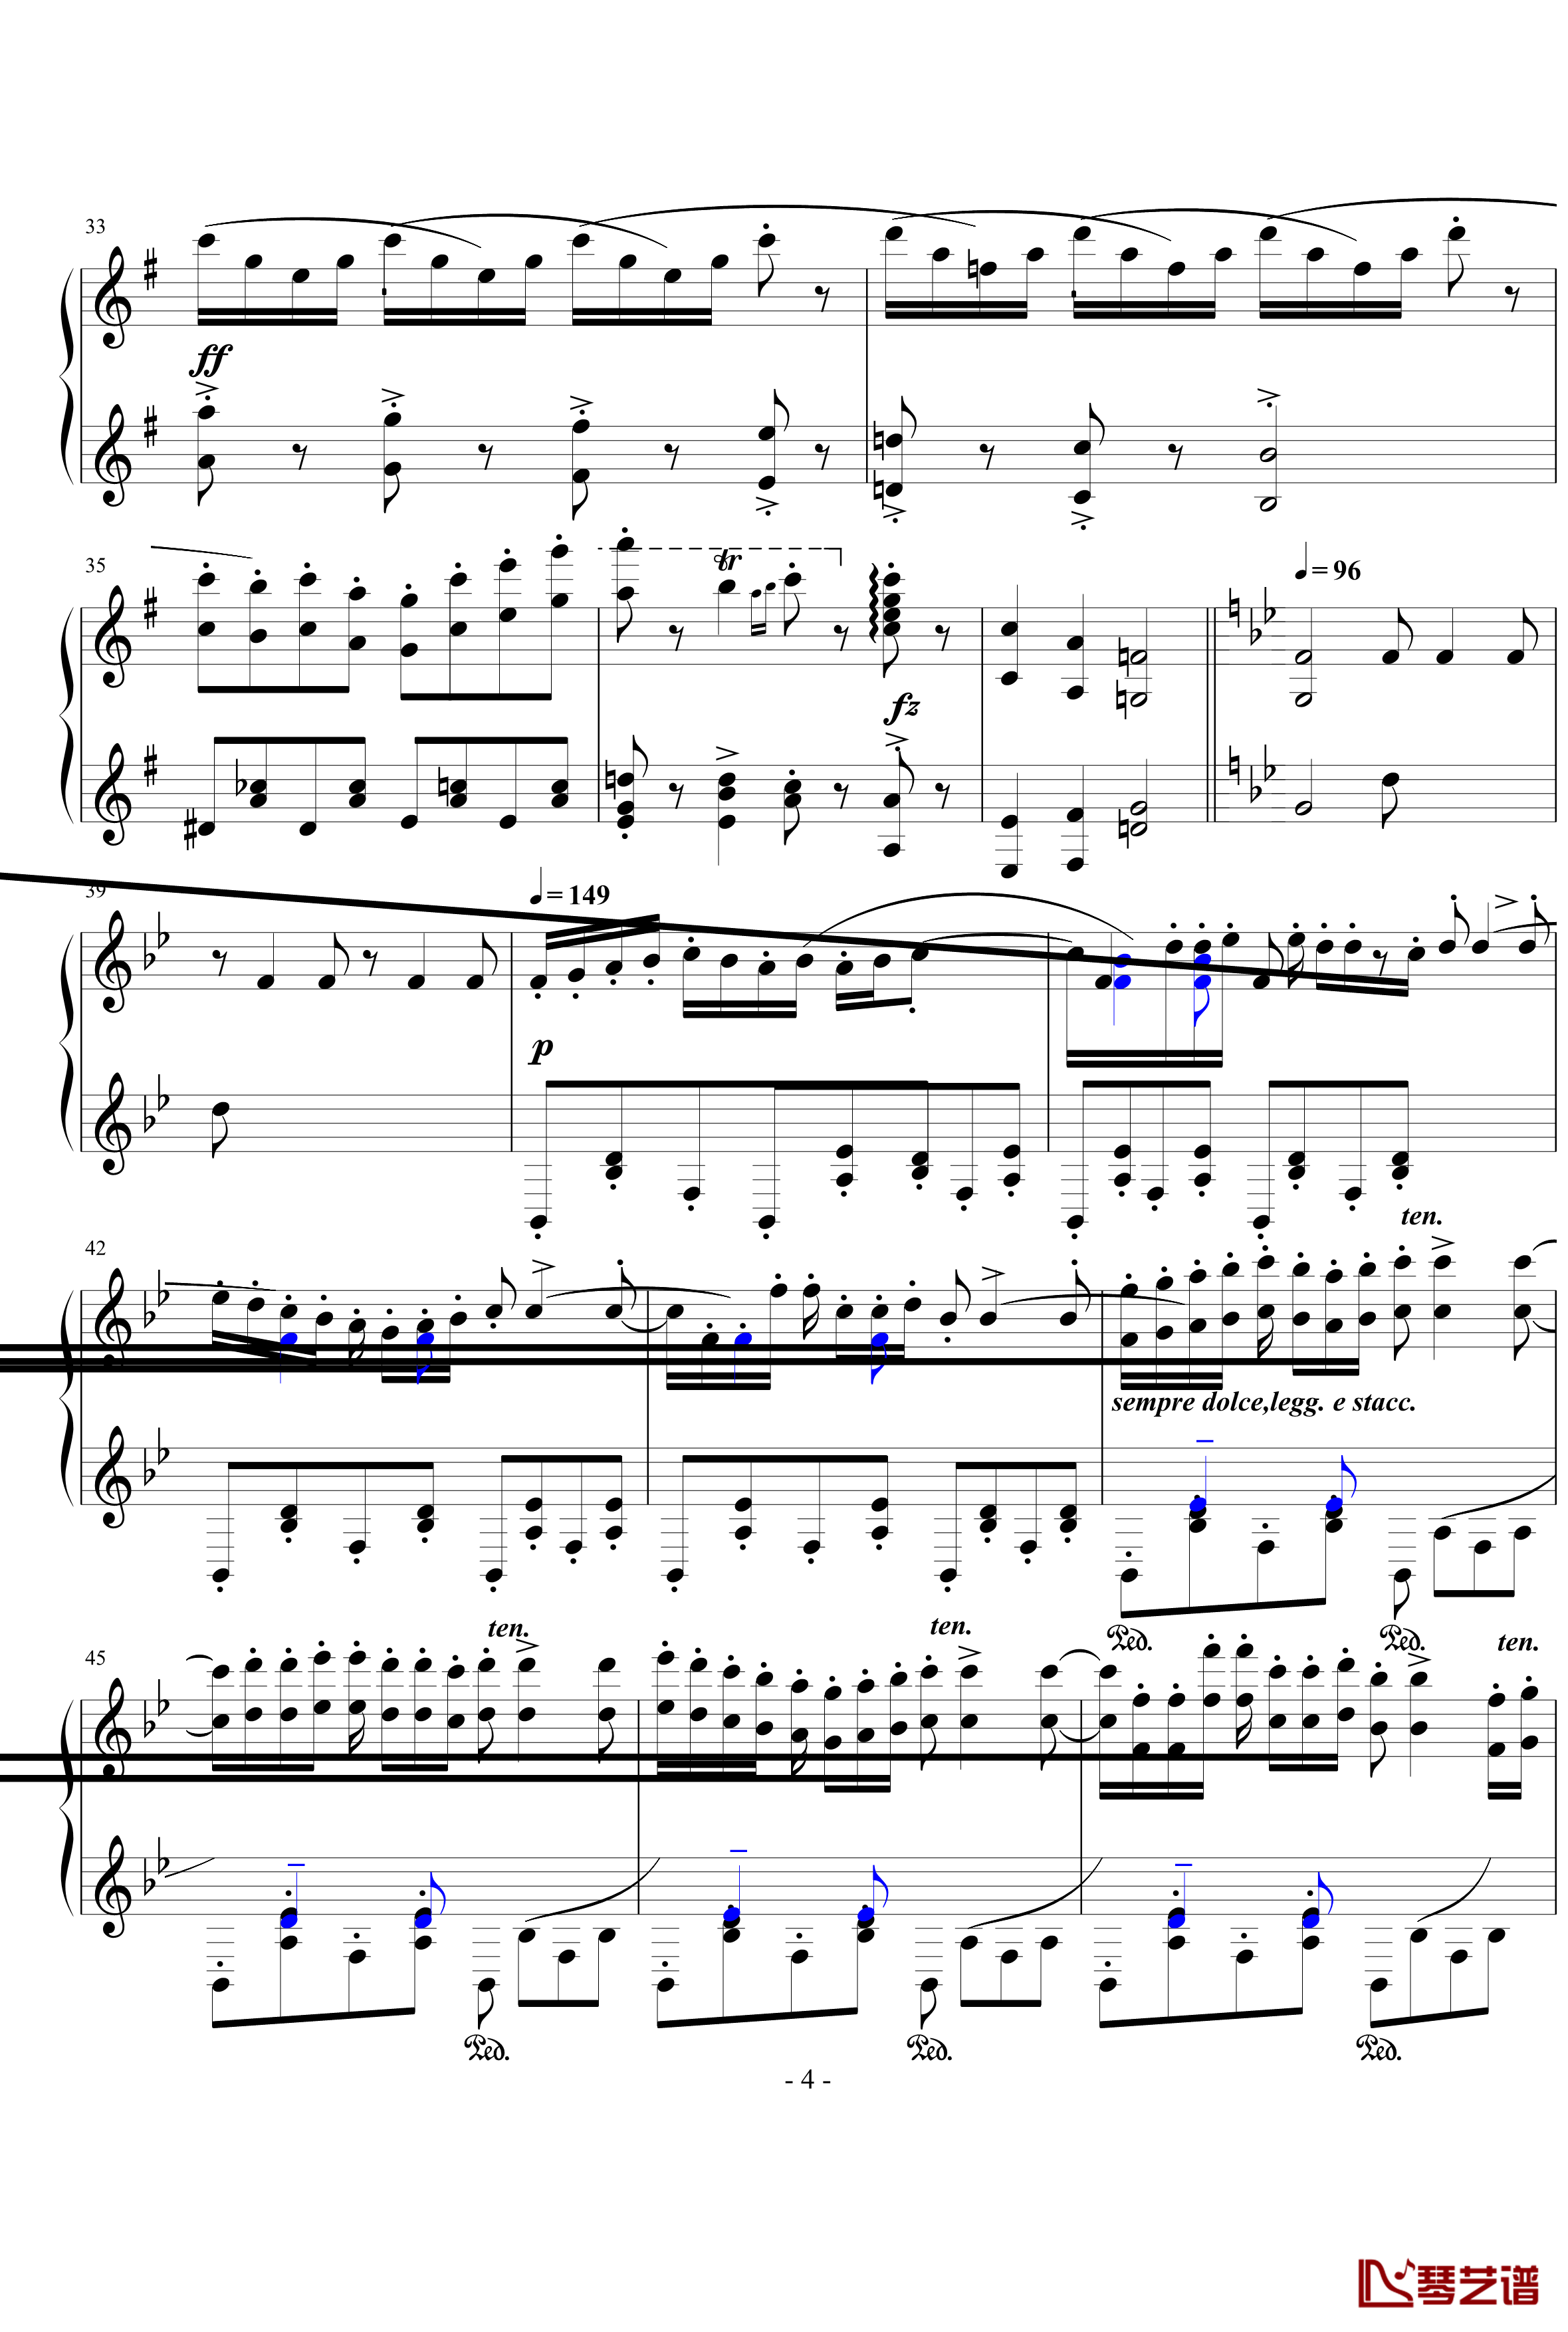 Grand Fantasia de Virtuosity钢琴谱-strikelzx4